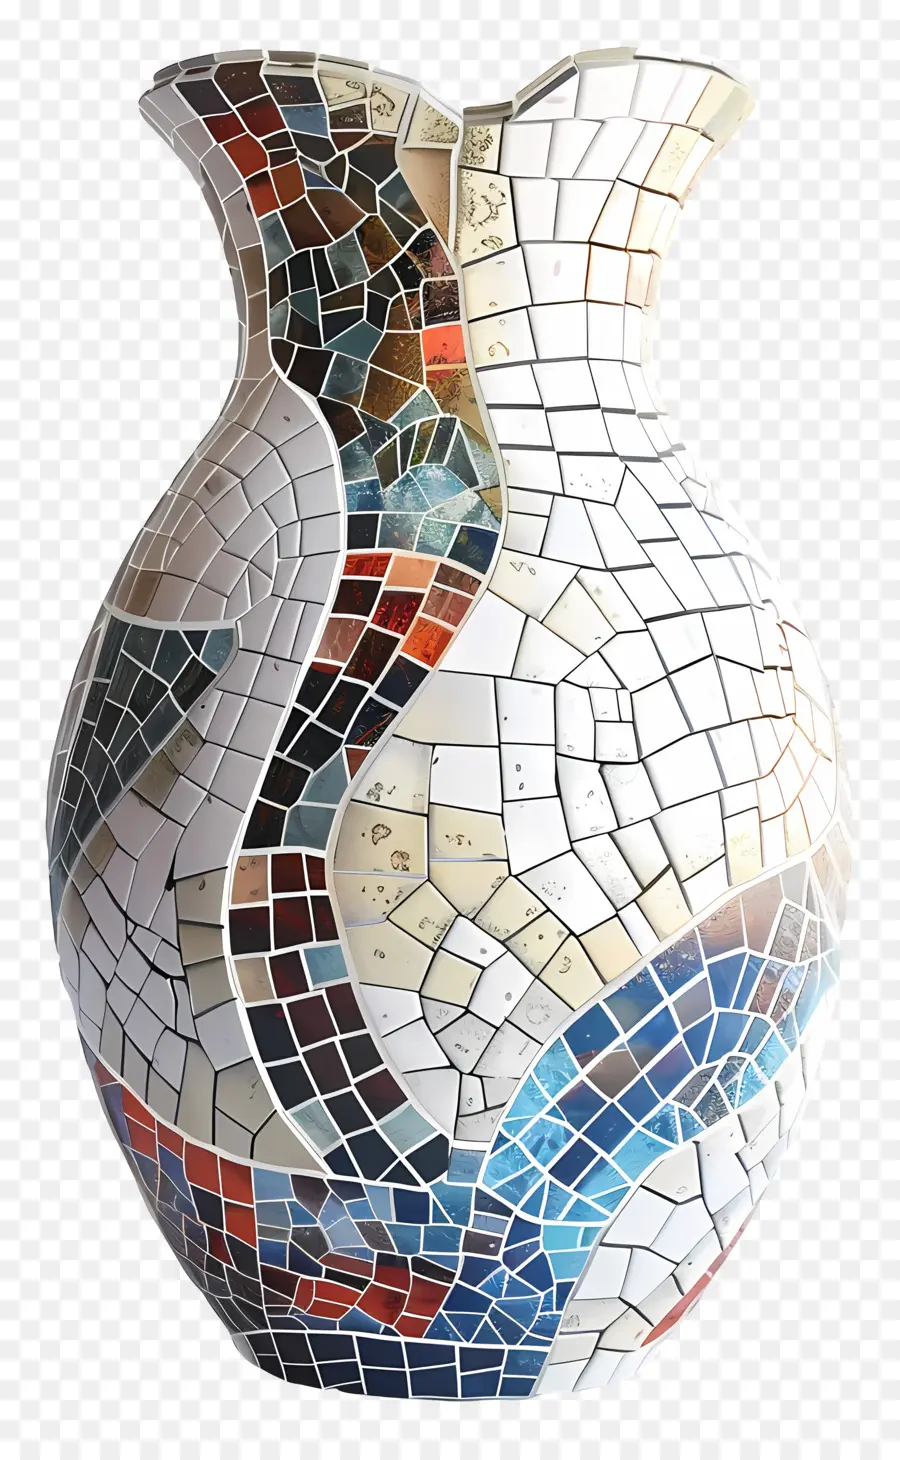 abstrakte Muster - Große Mosaikvase mit farbenfrohen, abstrakten Wellenmuster